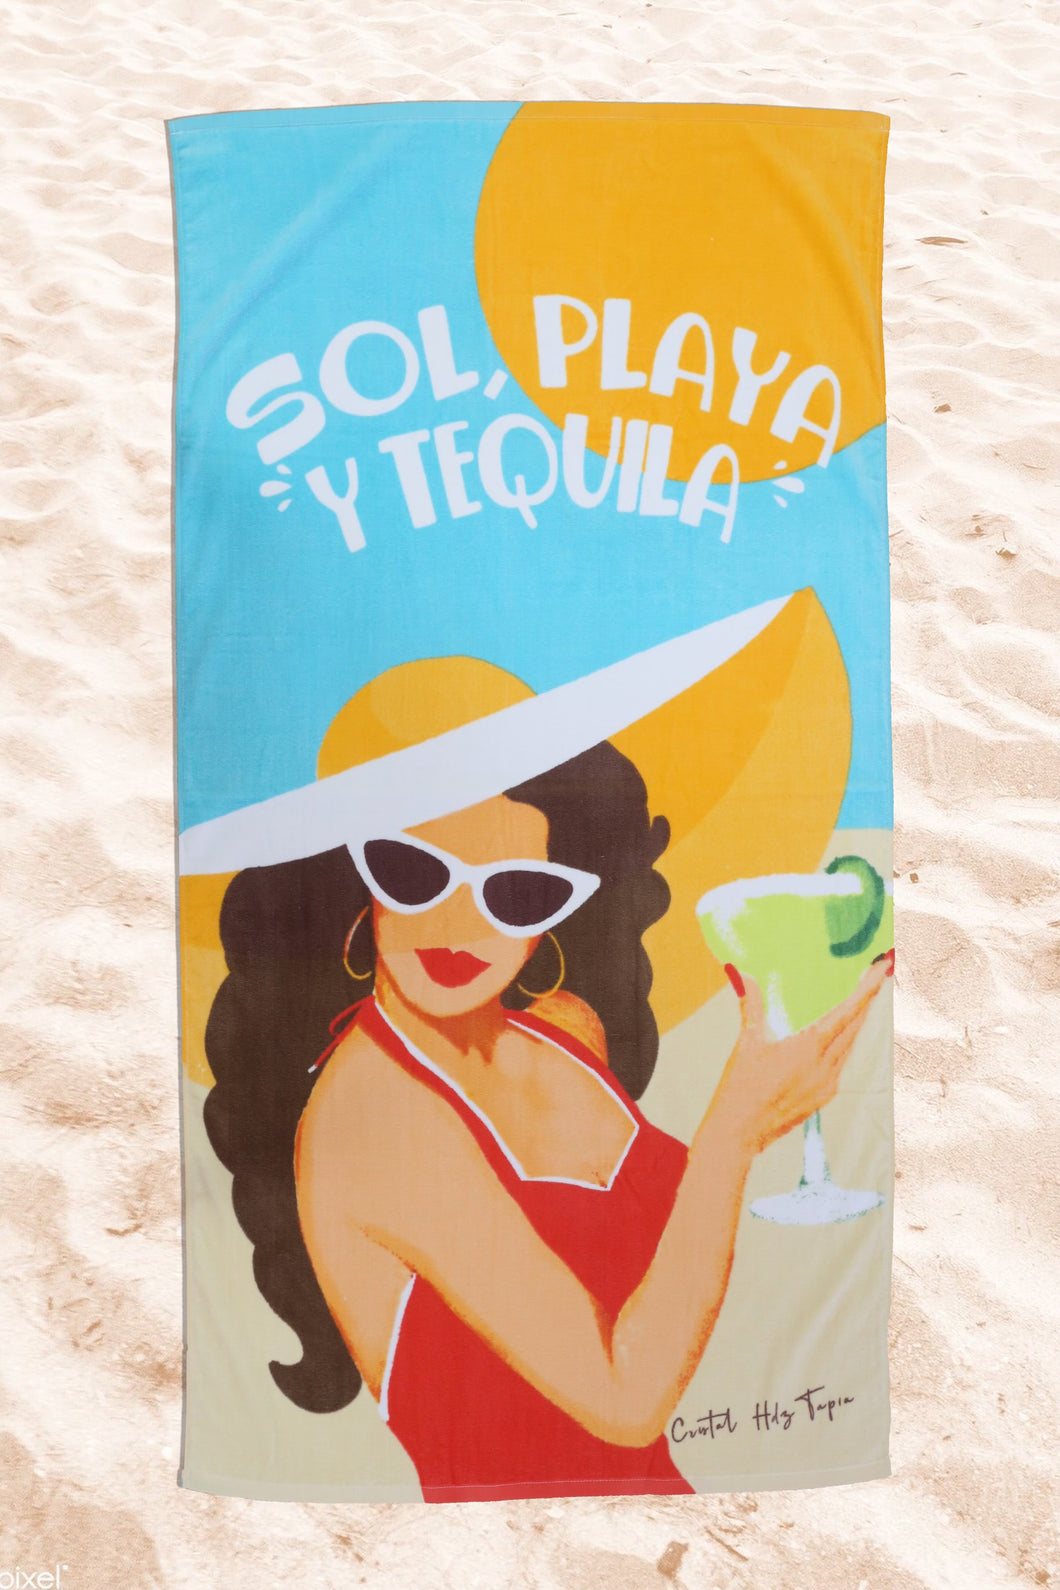 Sol Playa y Tequila Beach Towel